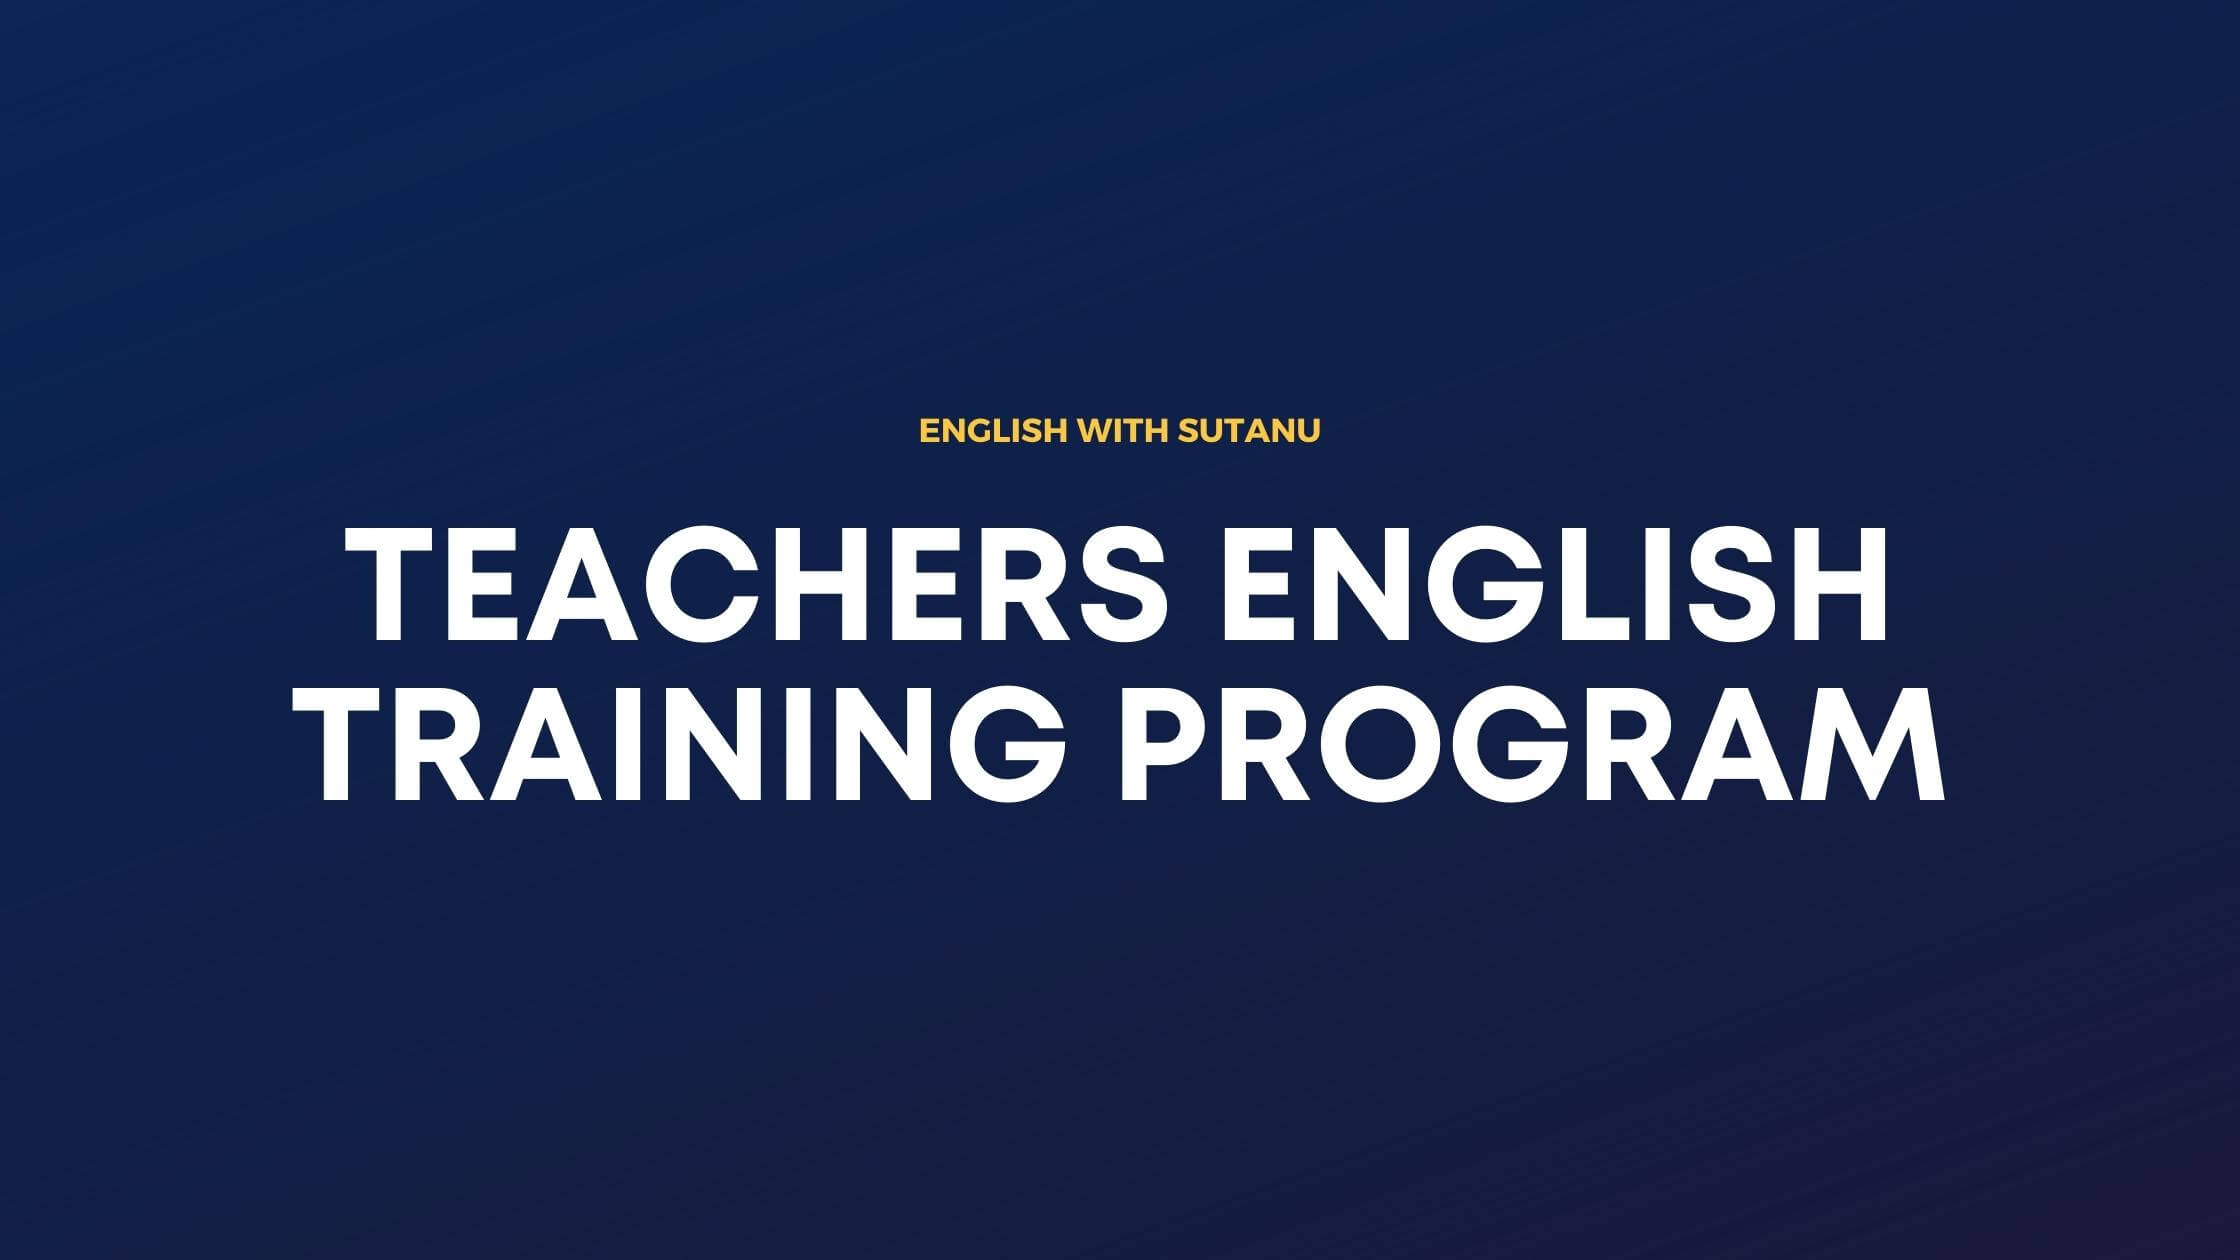 teachers-training-program-by-sshutanu-majumder